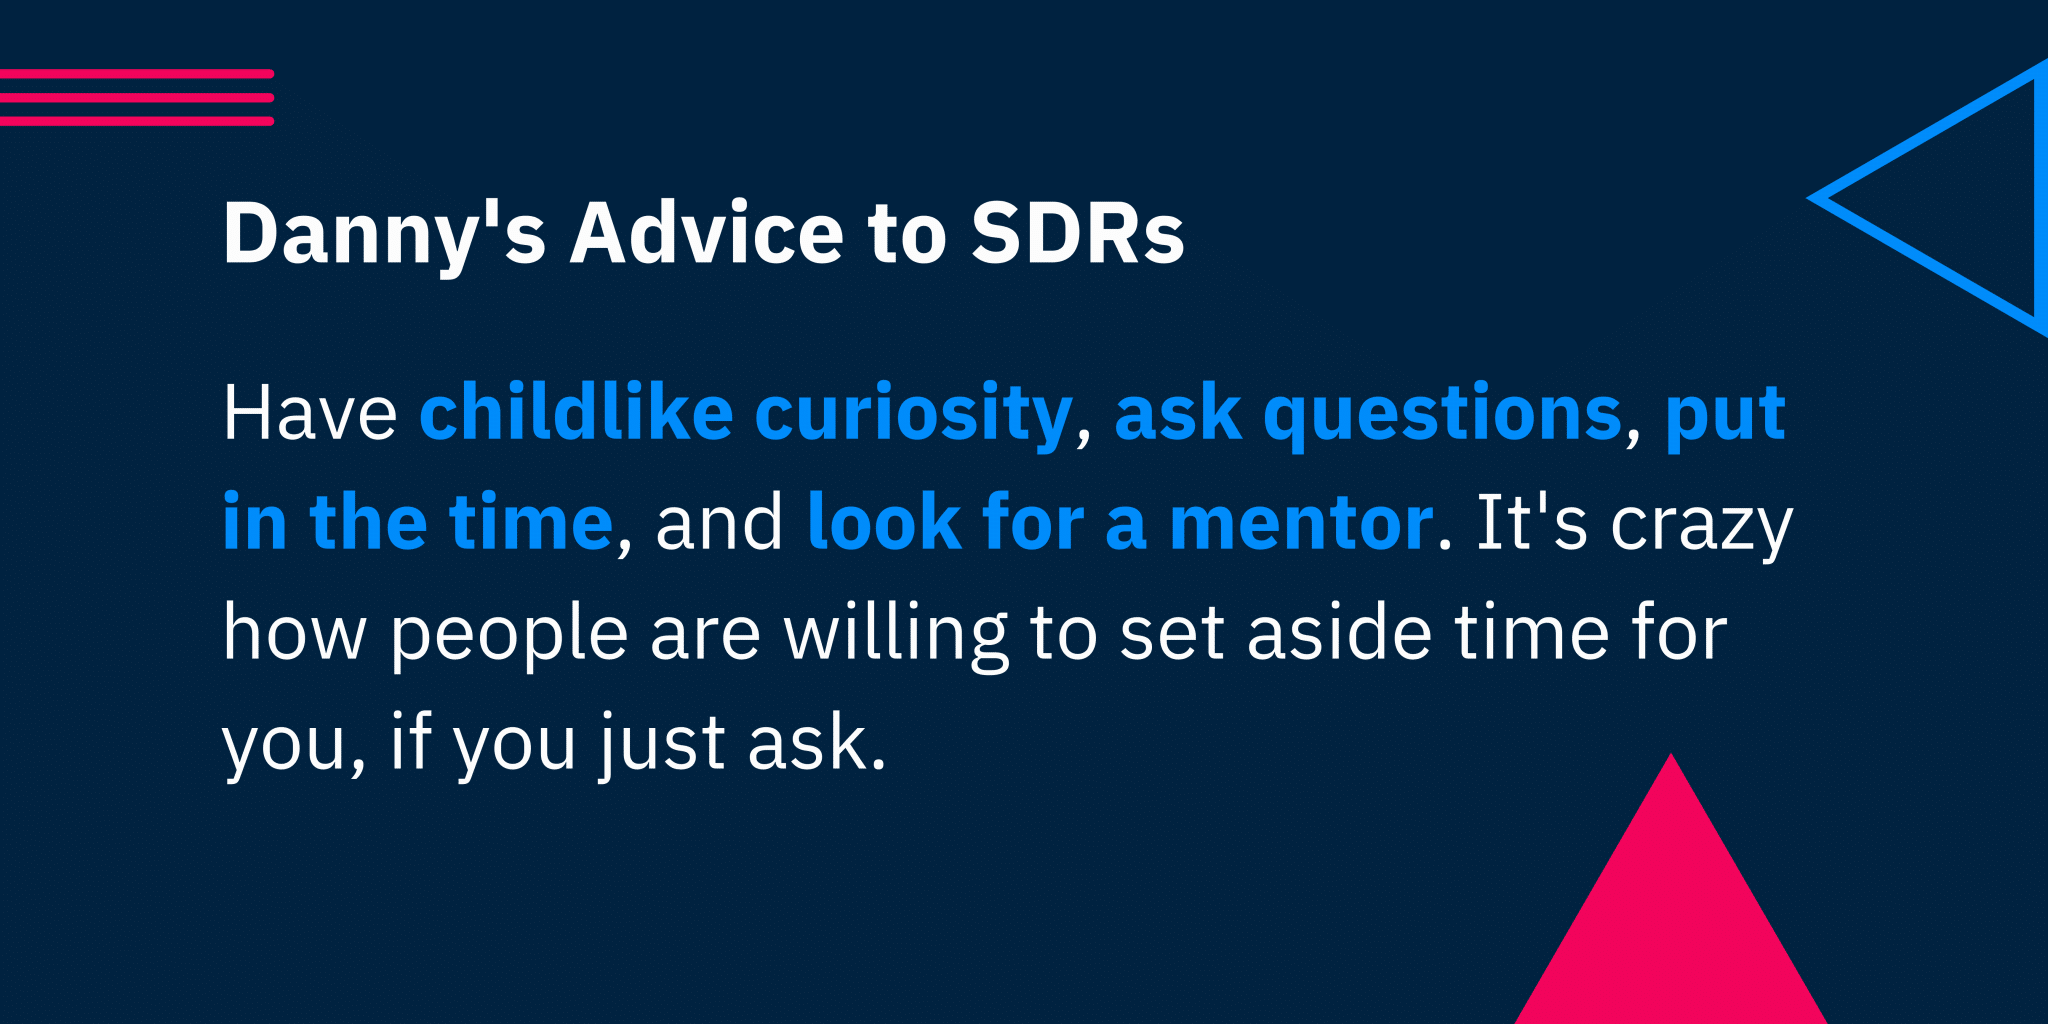 Danny's advice to SDRs